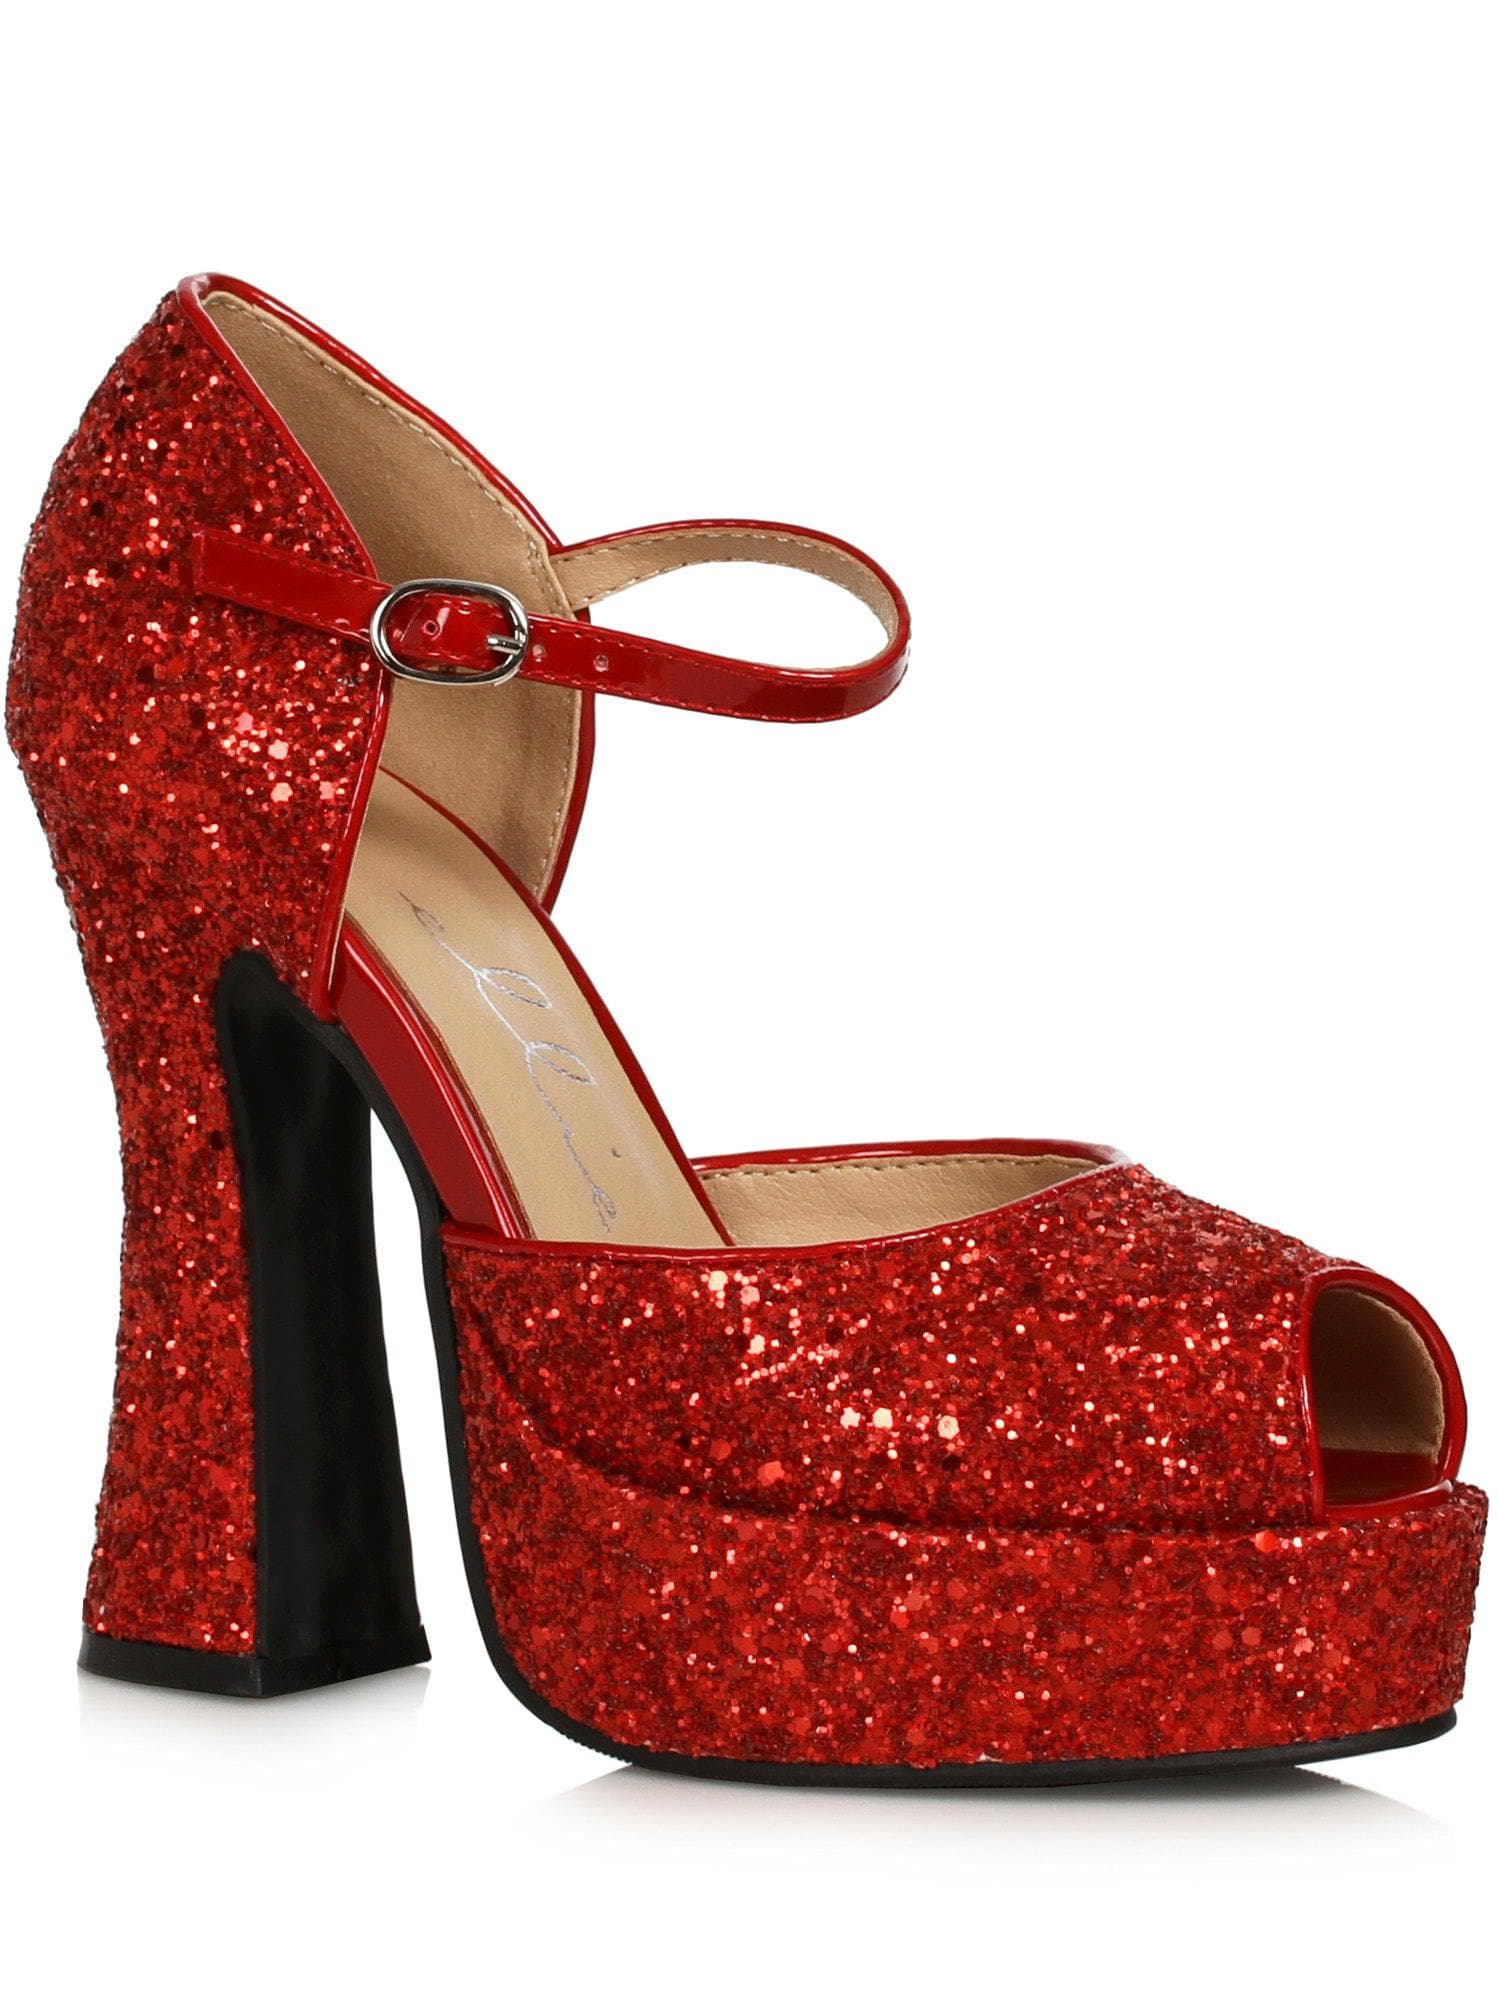 Adult Red Glitter Open Toe Platform Heeled Shoes - costumes.com